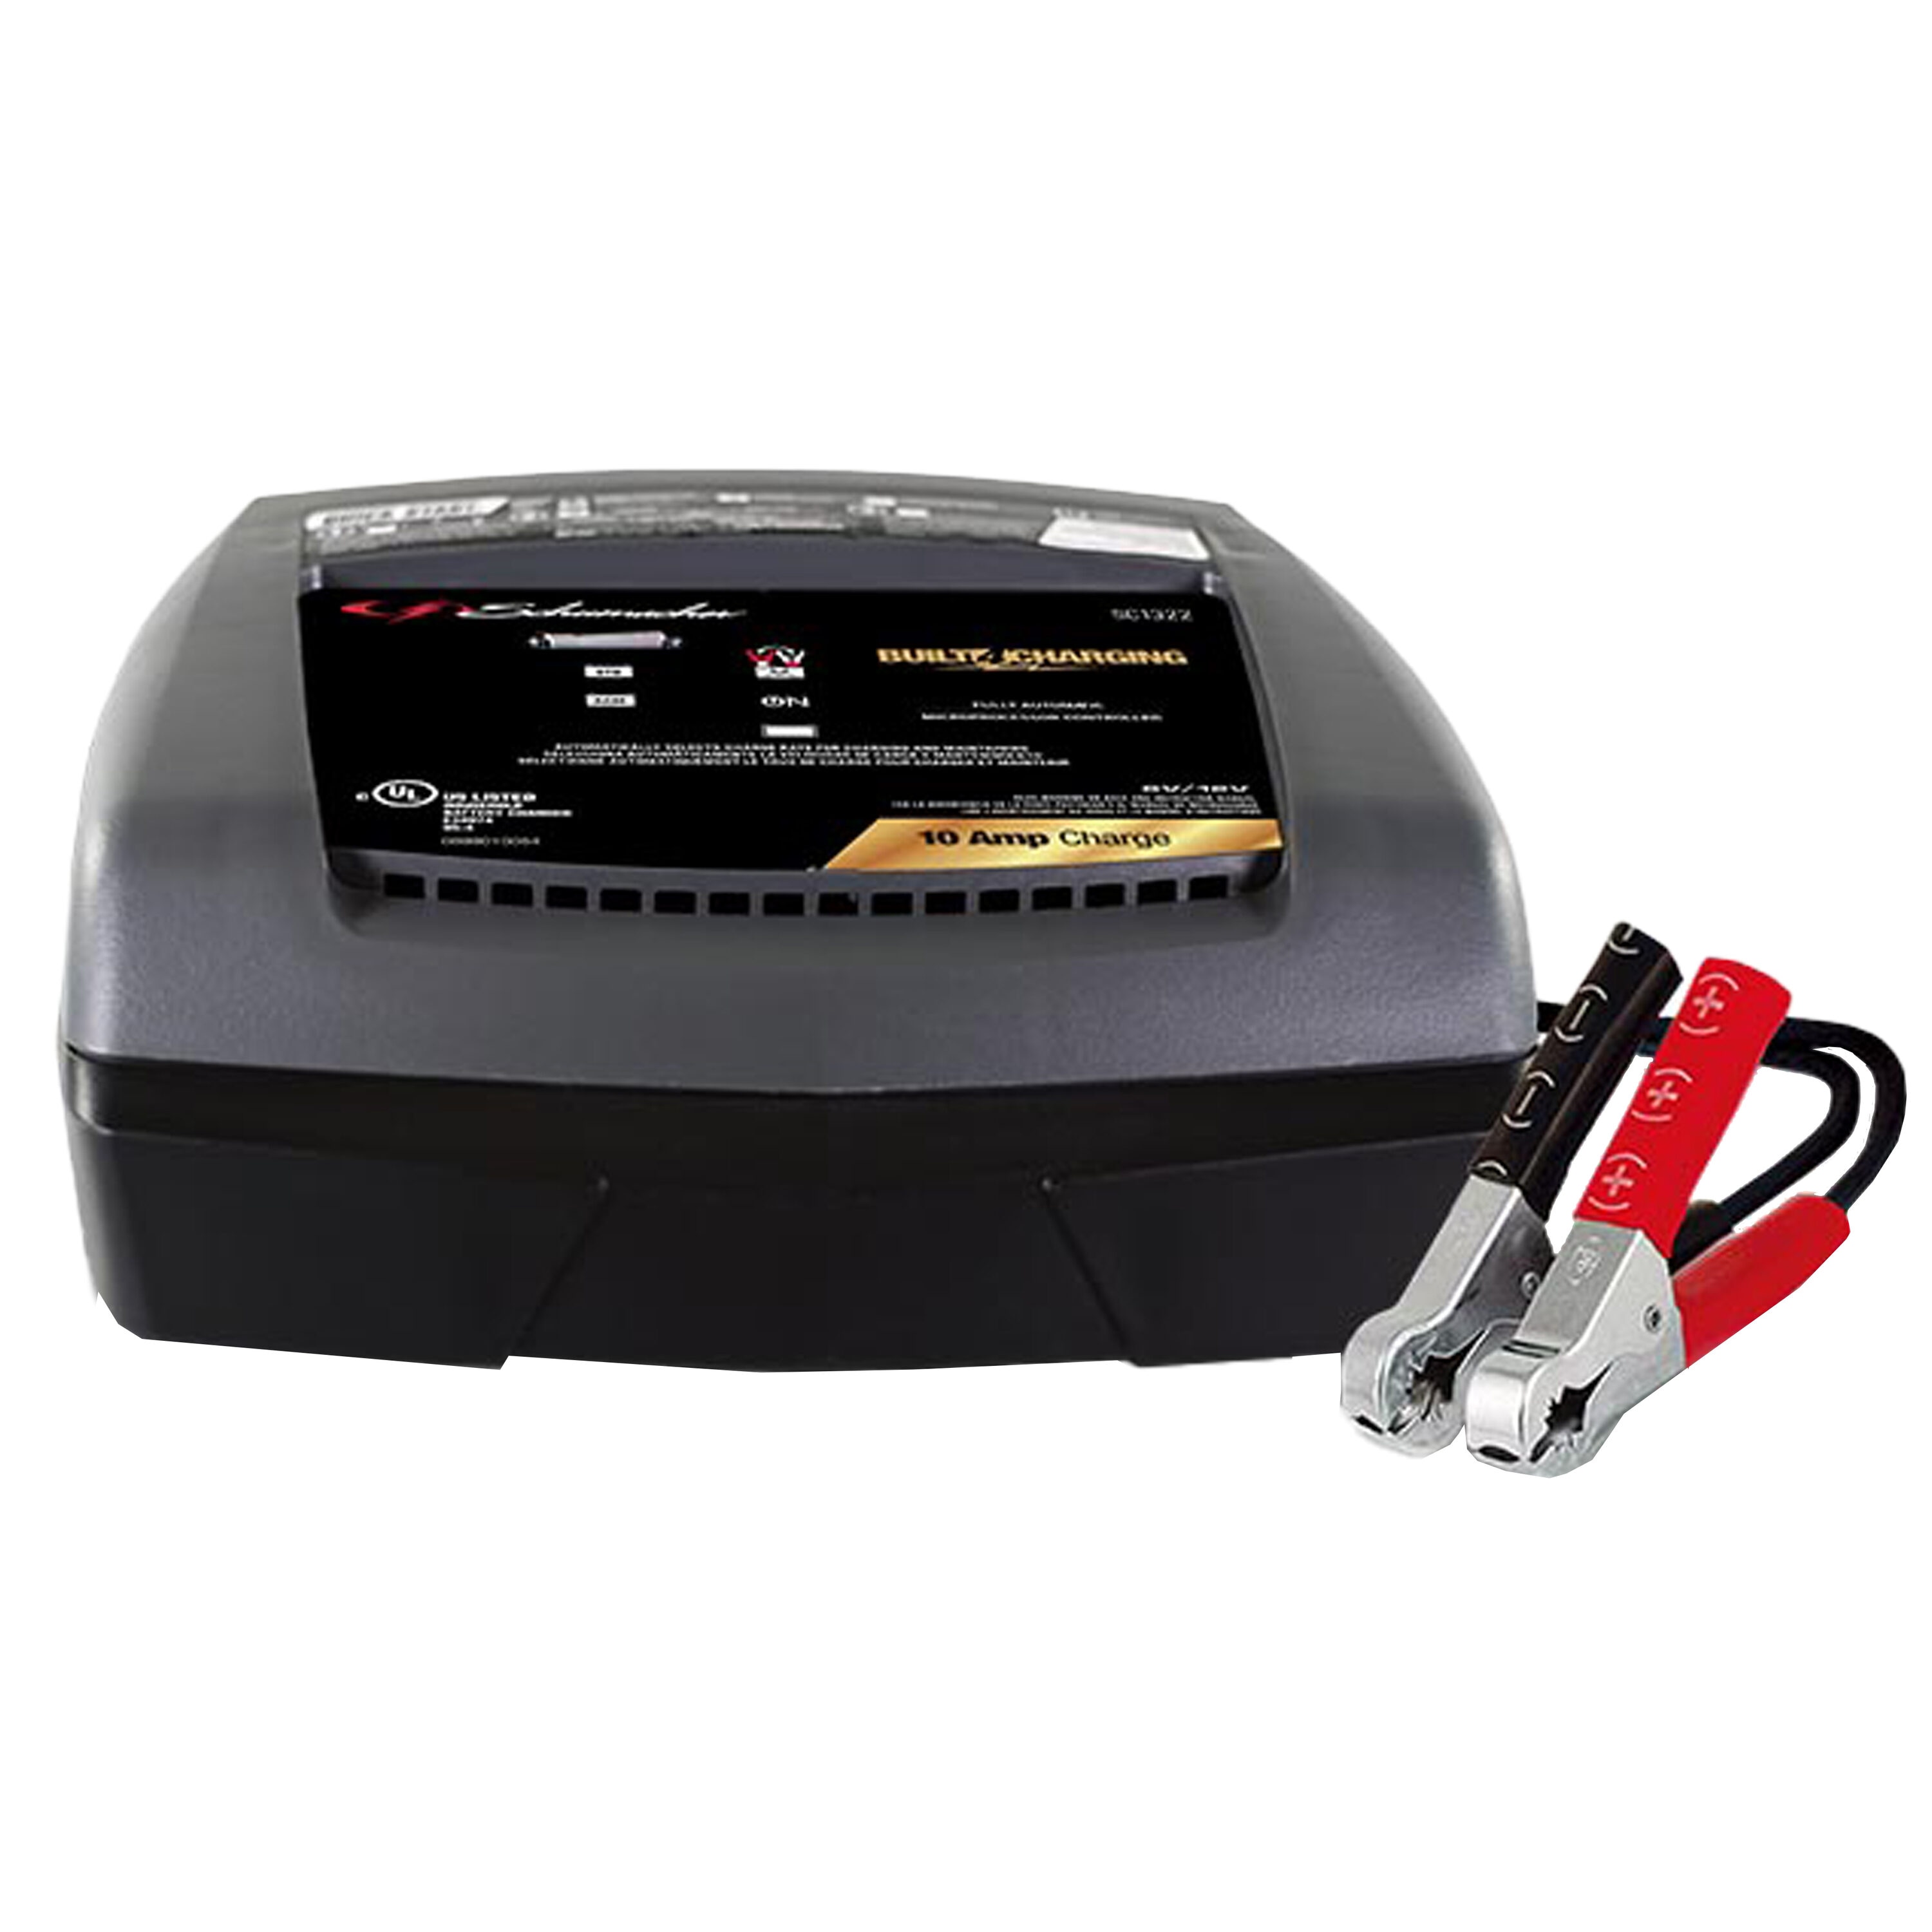 Schumacher Electric 50-Amp 12-Volt Car Battery Charger at